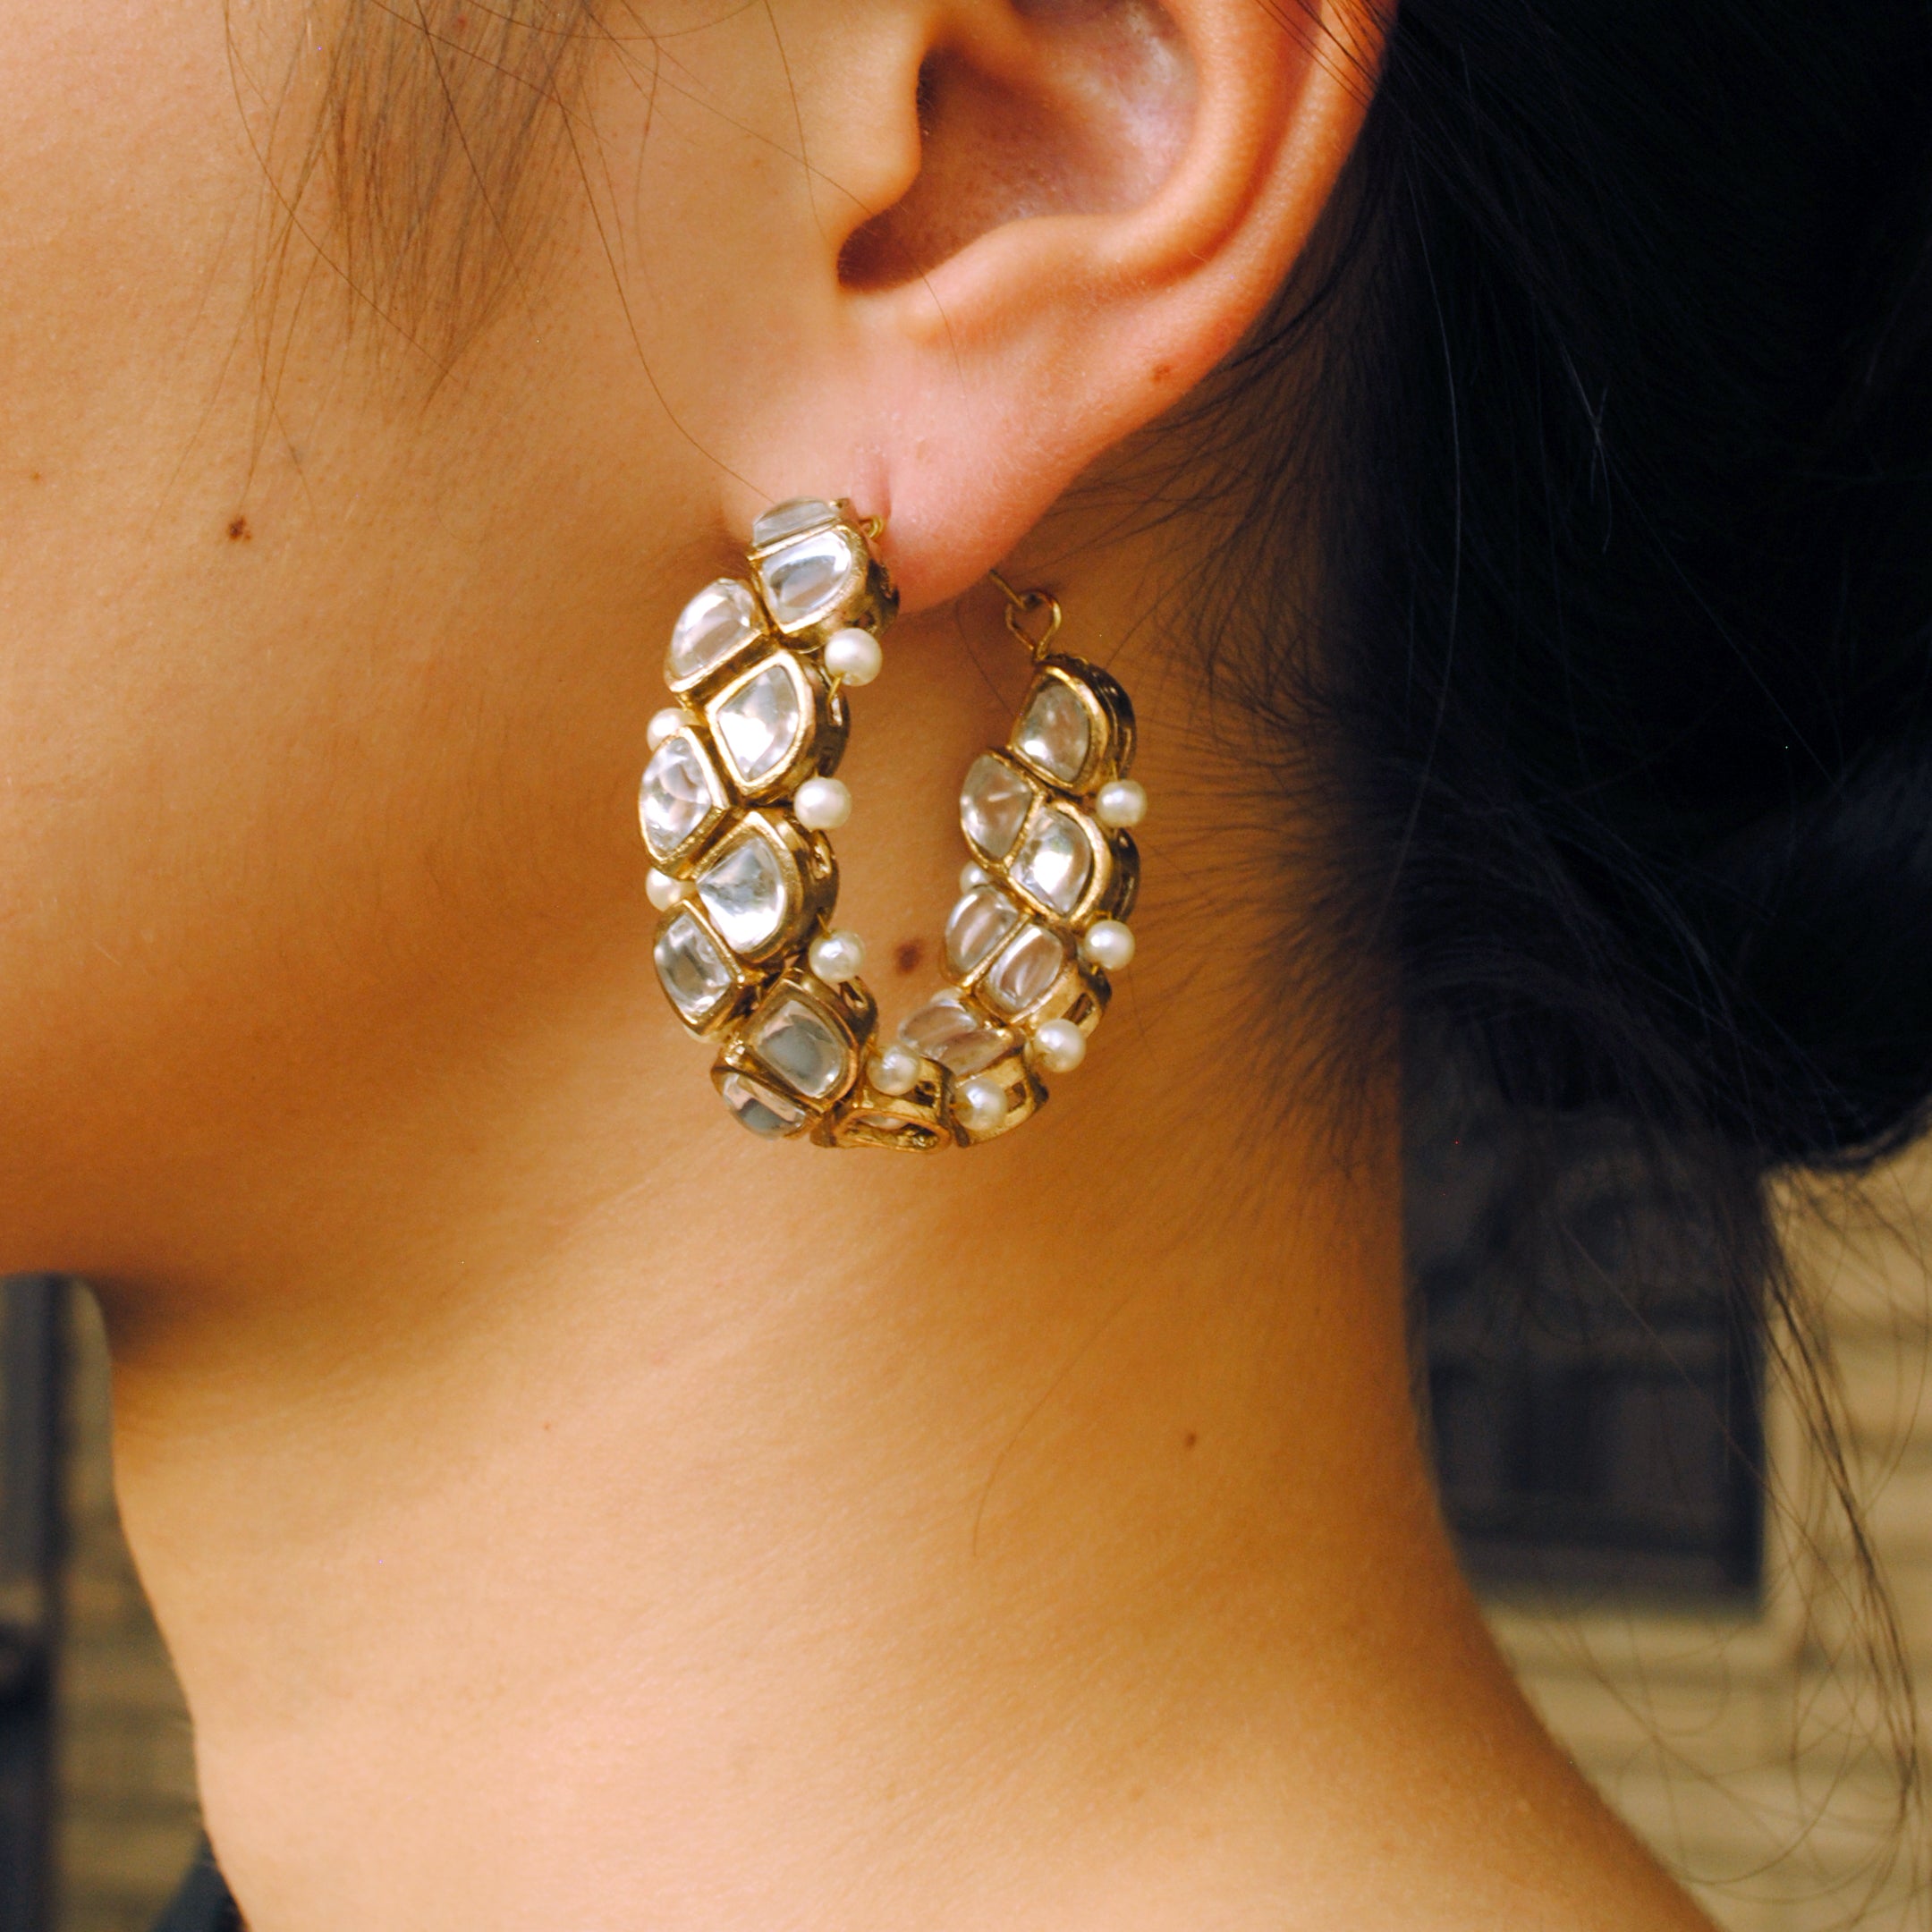 Buy Discs of Love Earrings Online in India | Zariin